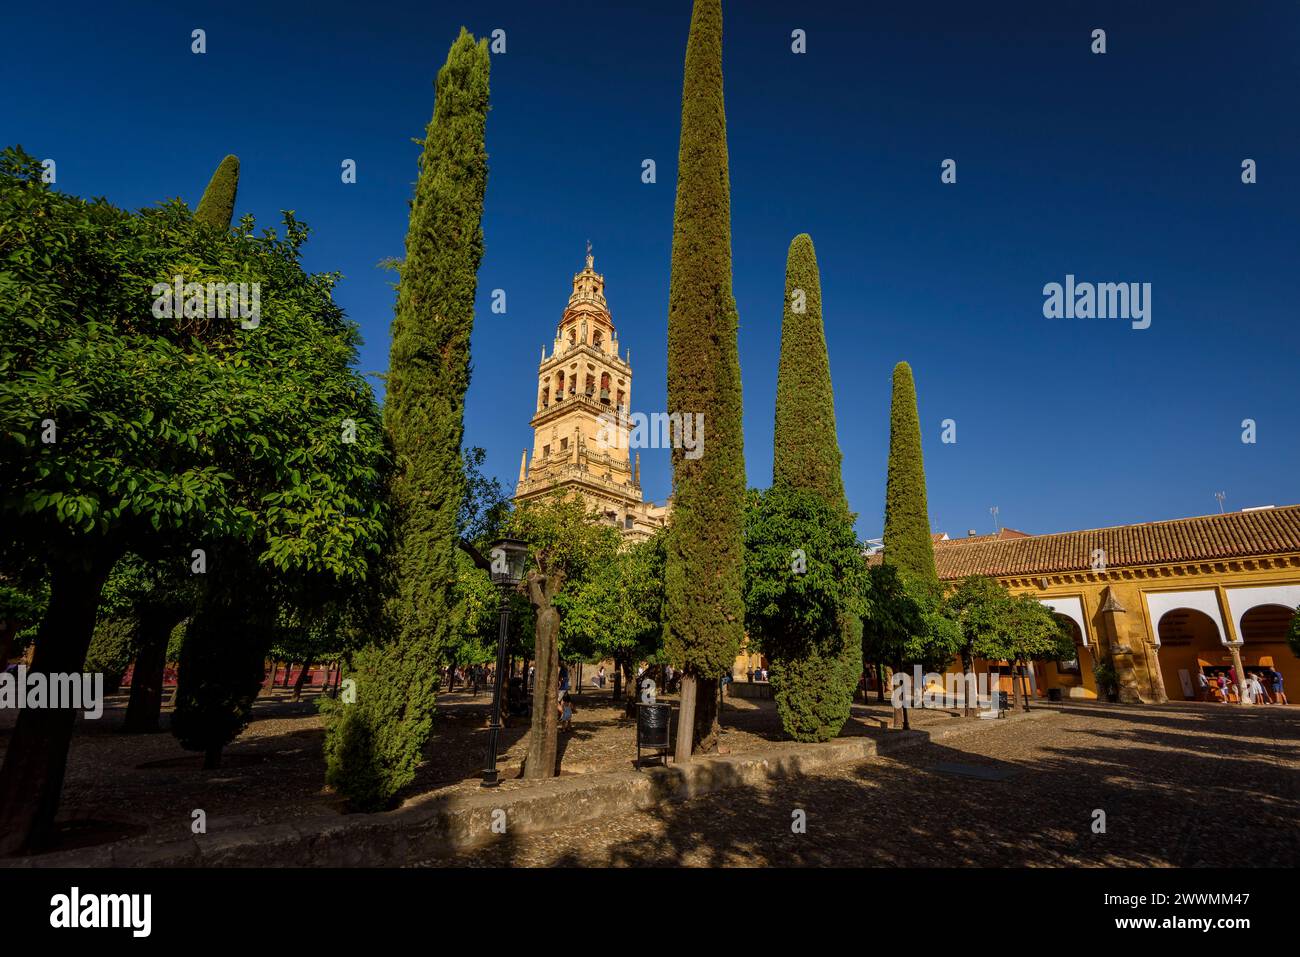 Glockenturm - Minarett der Moschee-Kathedrale von Córdoba (Córdoba, Andalusien, Spanien) ESP: Campanario - alminar de la Mezquita Catedral de Córdoba Stockfoto